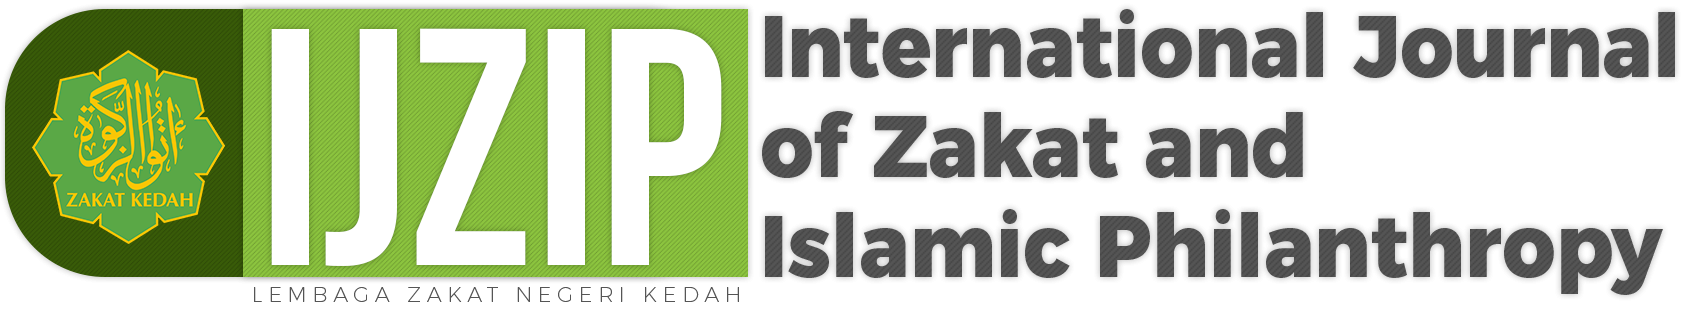 International Journal of Zakat and Islamic Philanthropy